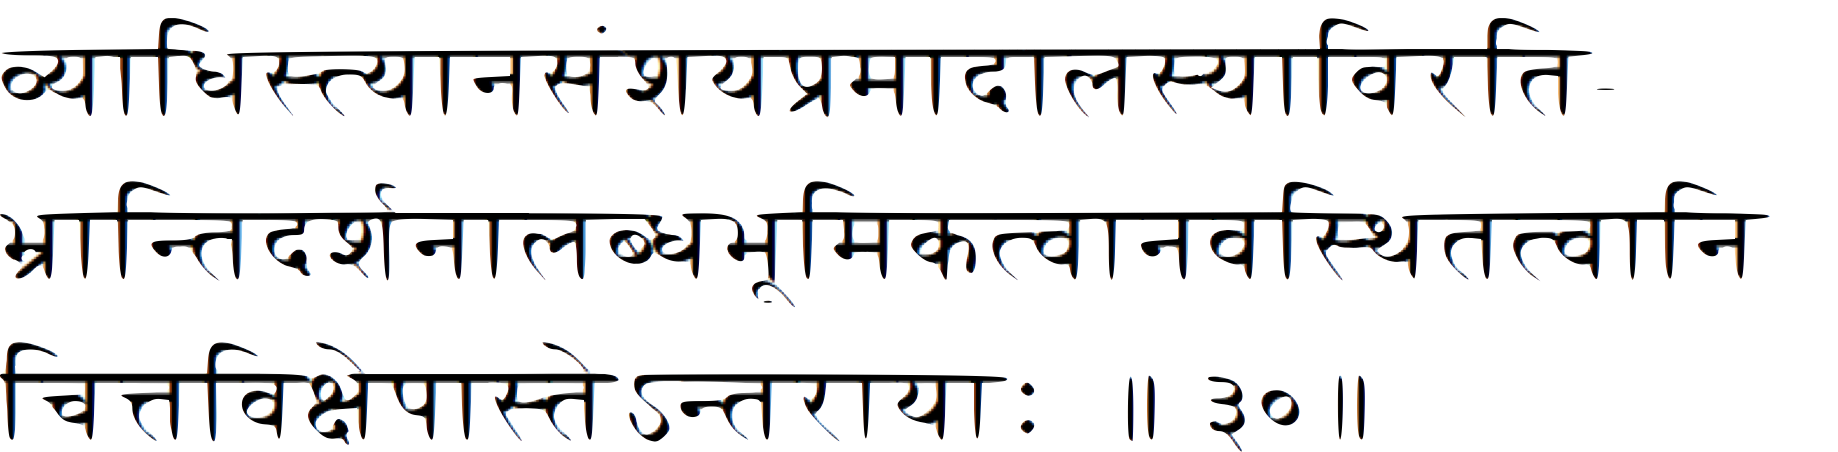 sutra 30 vyaadhi styaan sanshay pramaad aalasya avirati bhraantidarshan alabdh-bhumikatv anavasthitvaani chitta-vikshepaste antaraayaah 